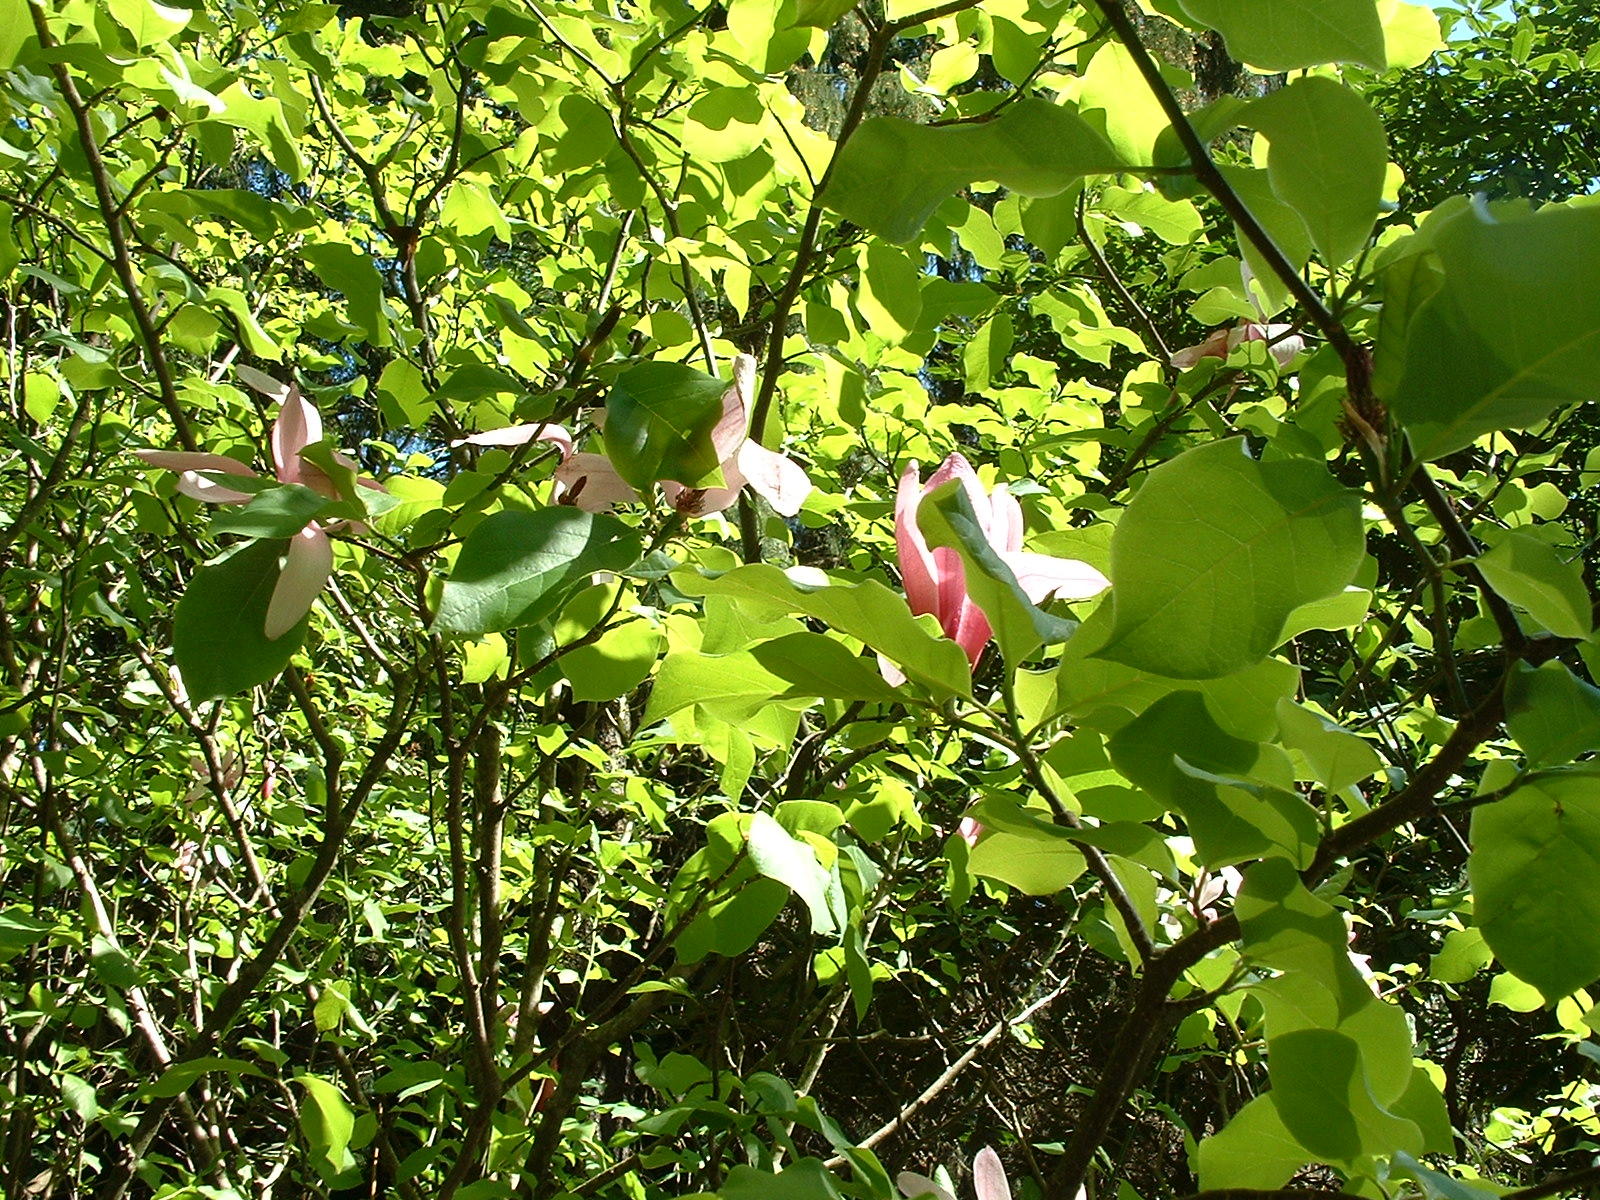 BRUNS Rhododendron Park in Gristede - Magnolie am Eingang zum Park